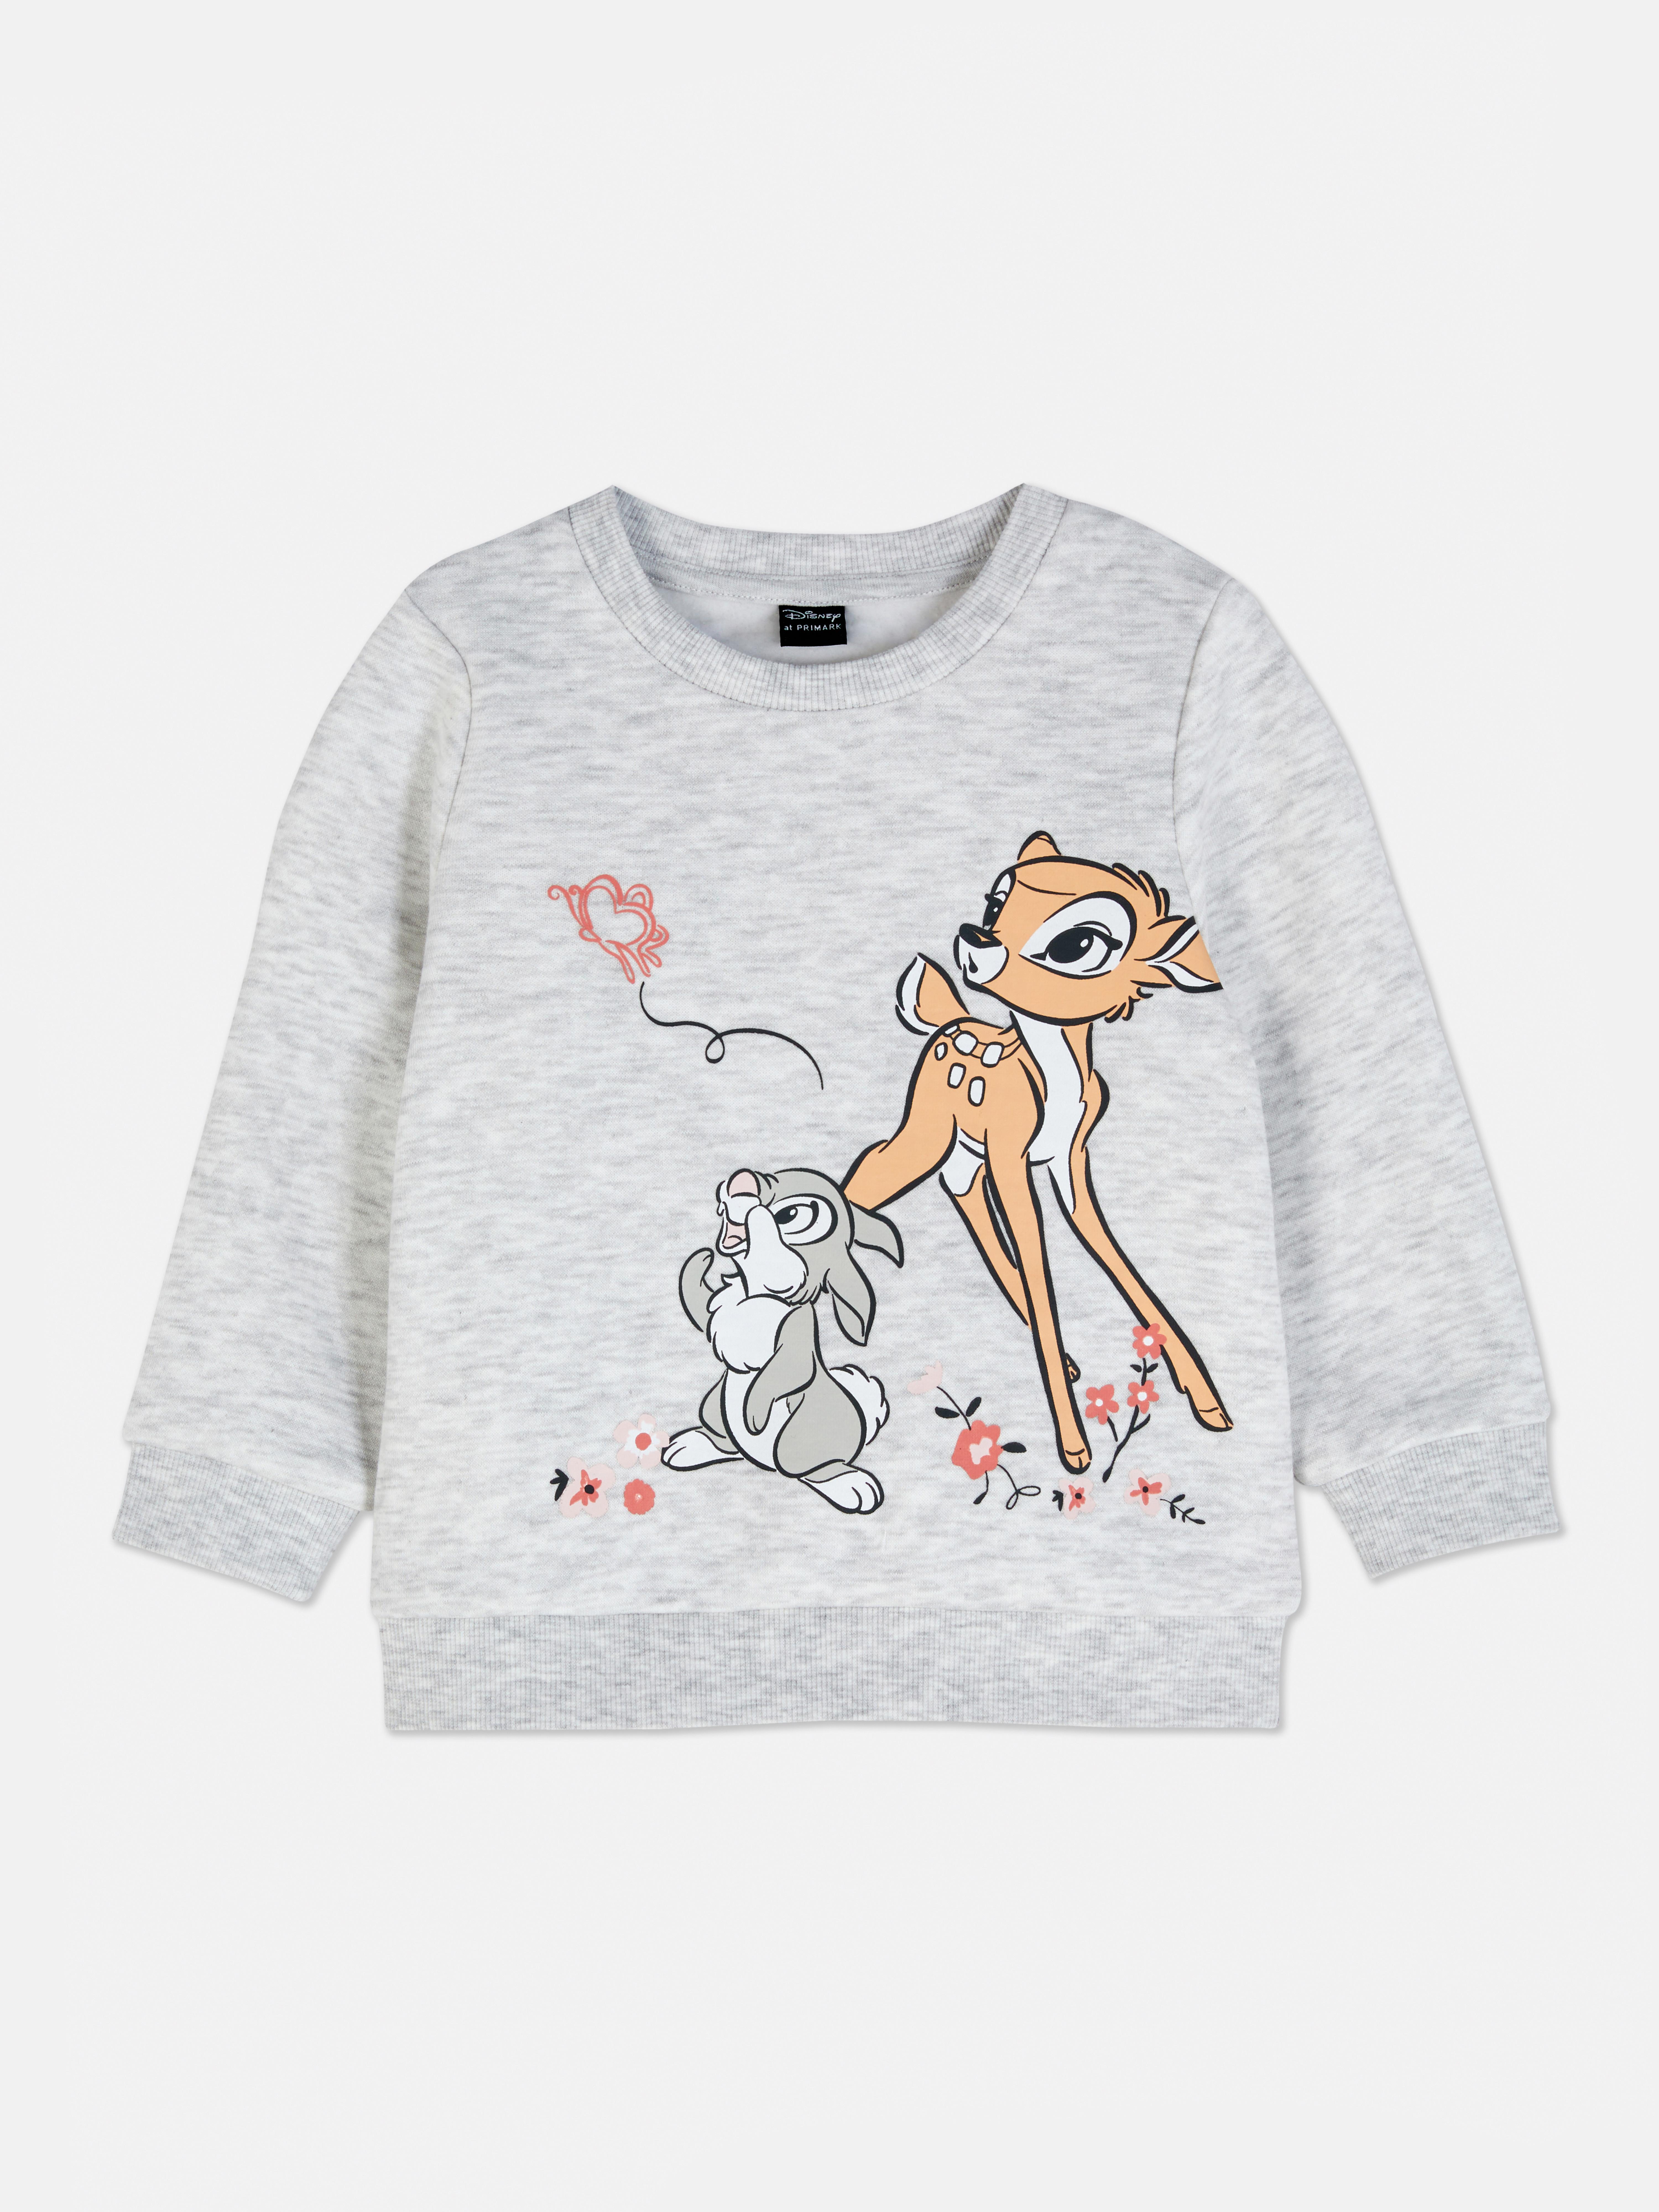 Disney's Bambi Printed Sweatshirt